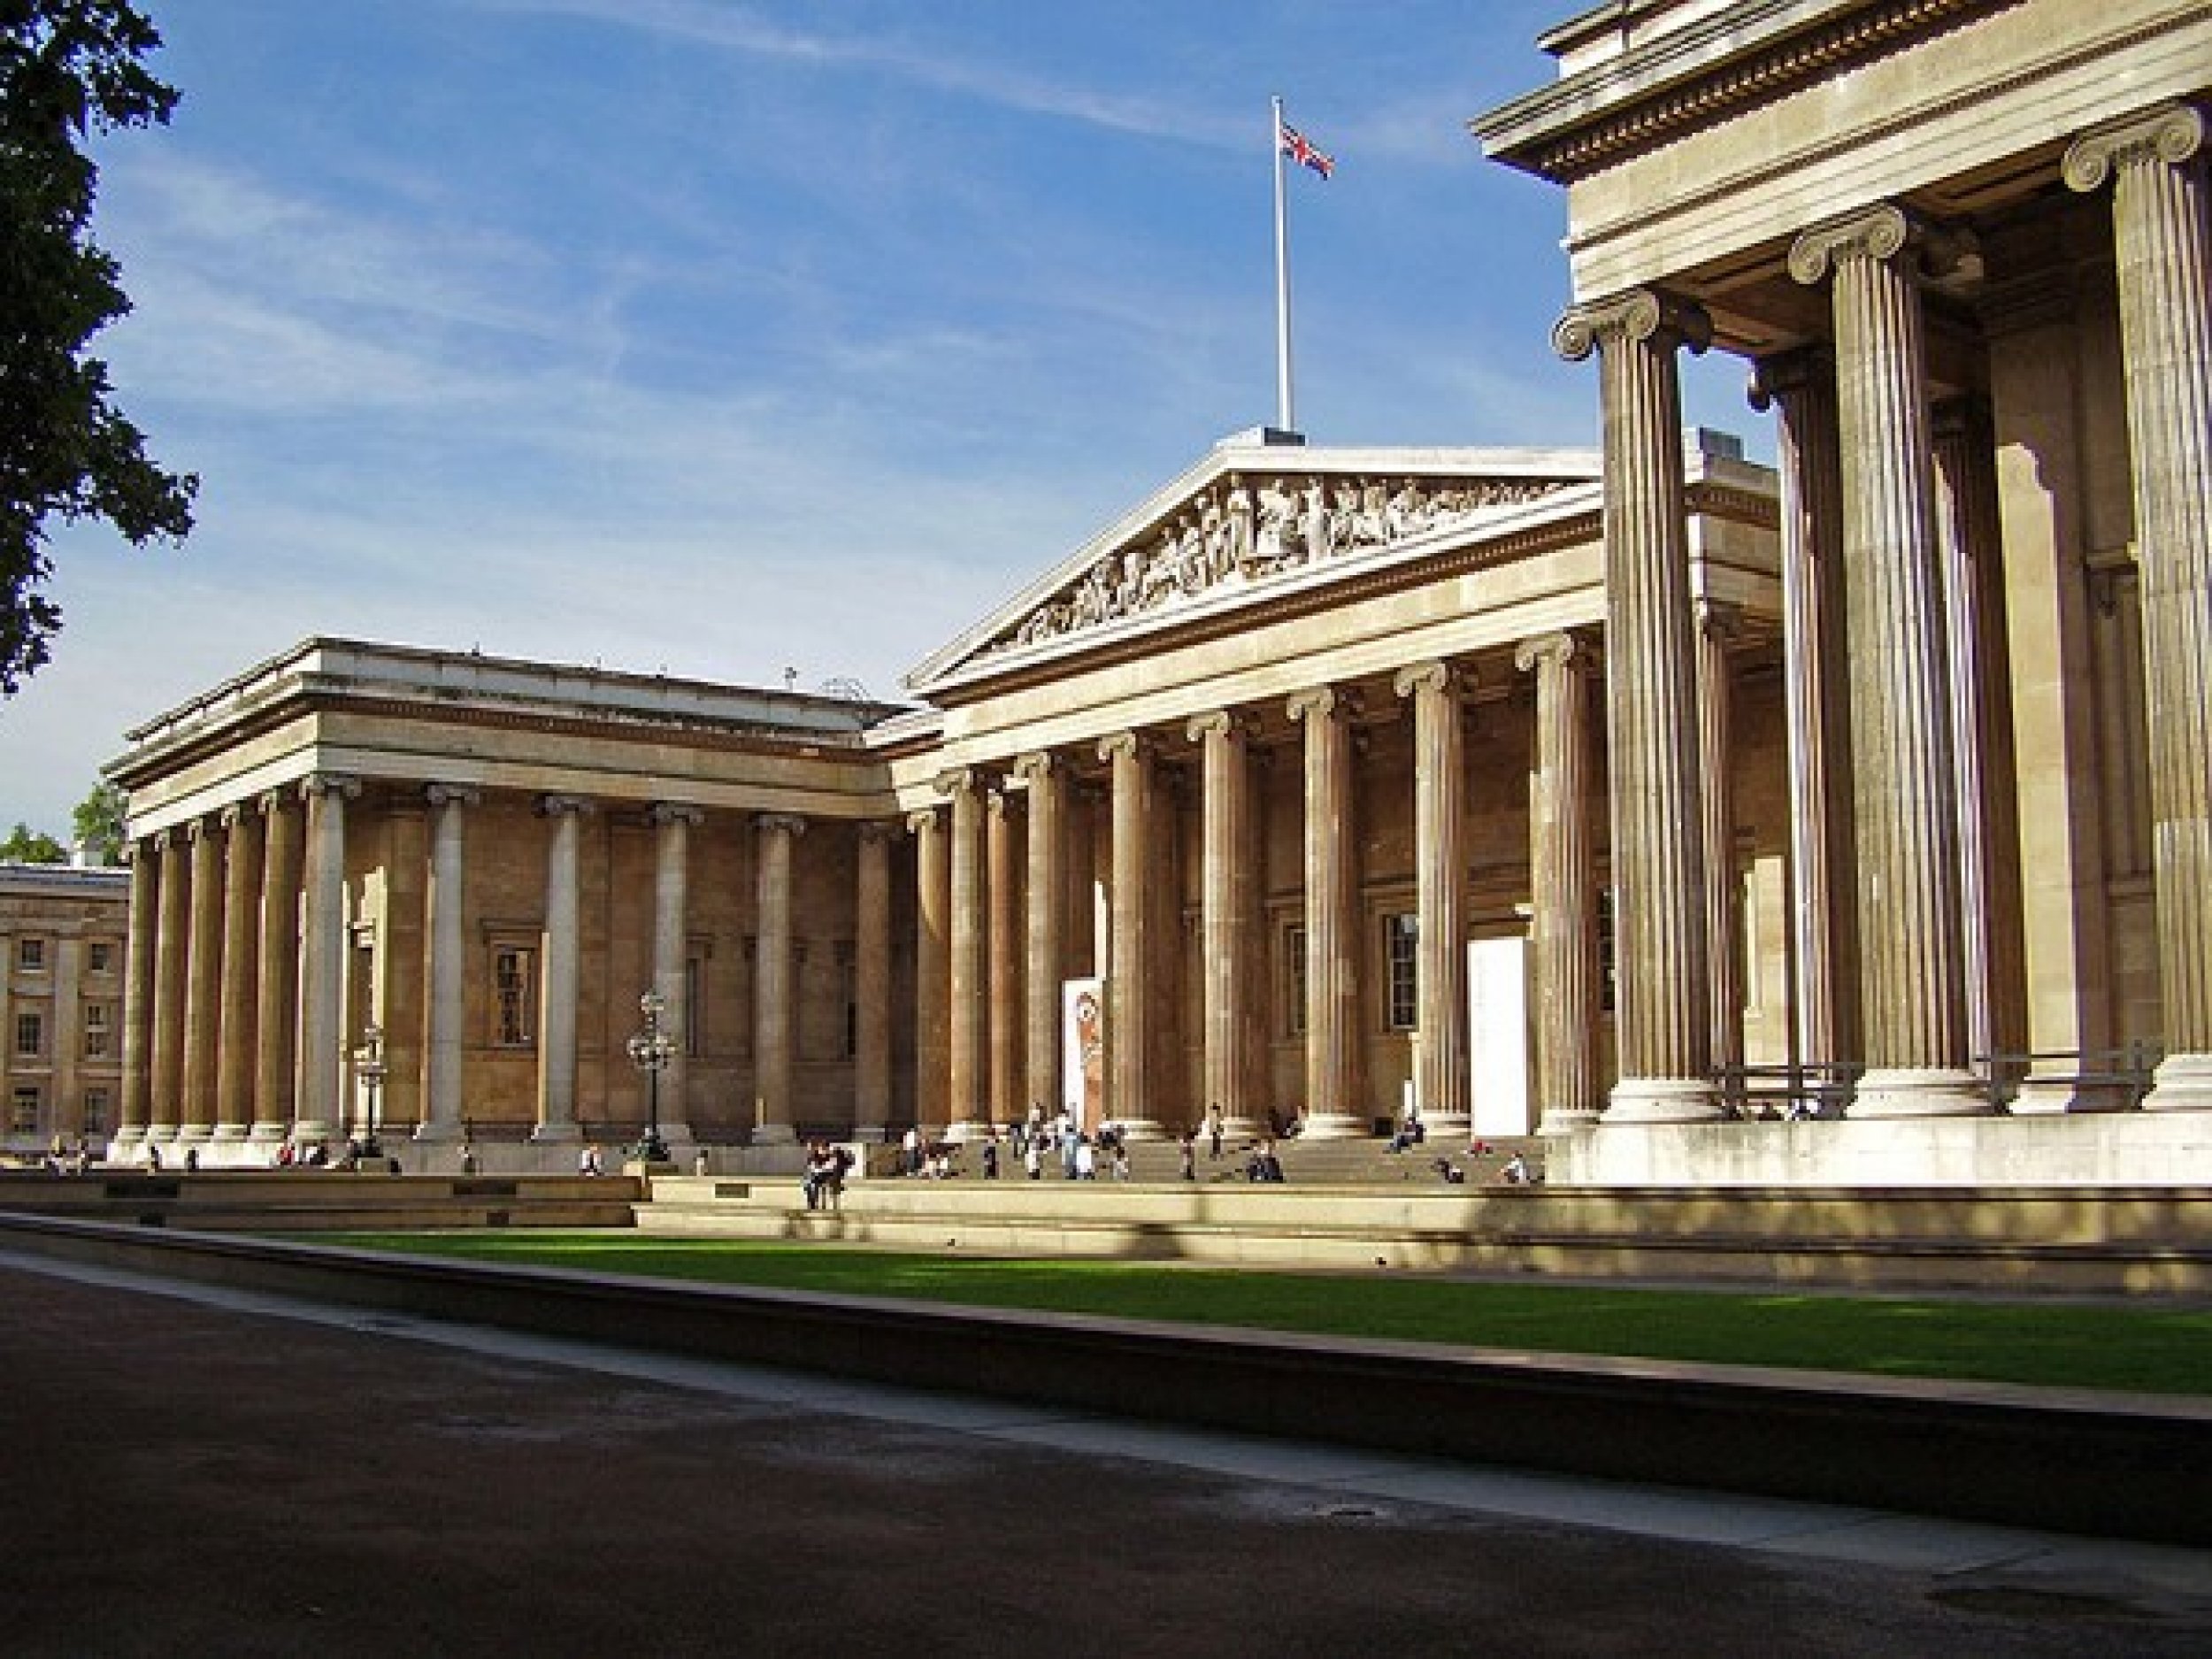 3. The British Museum 